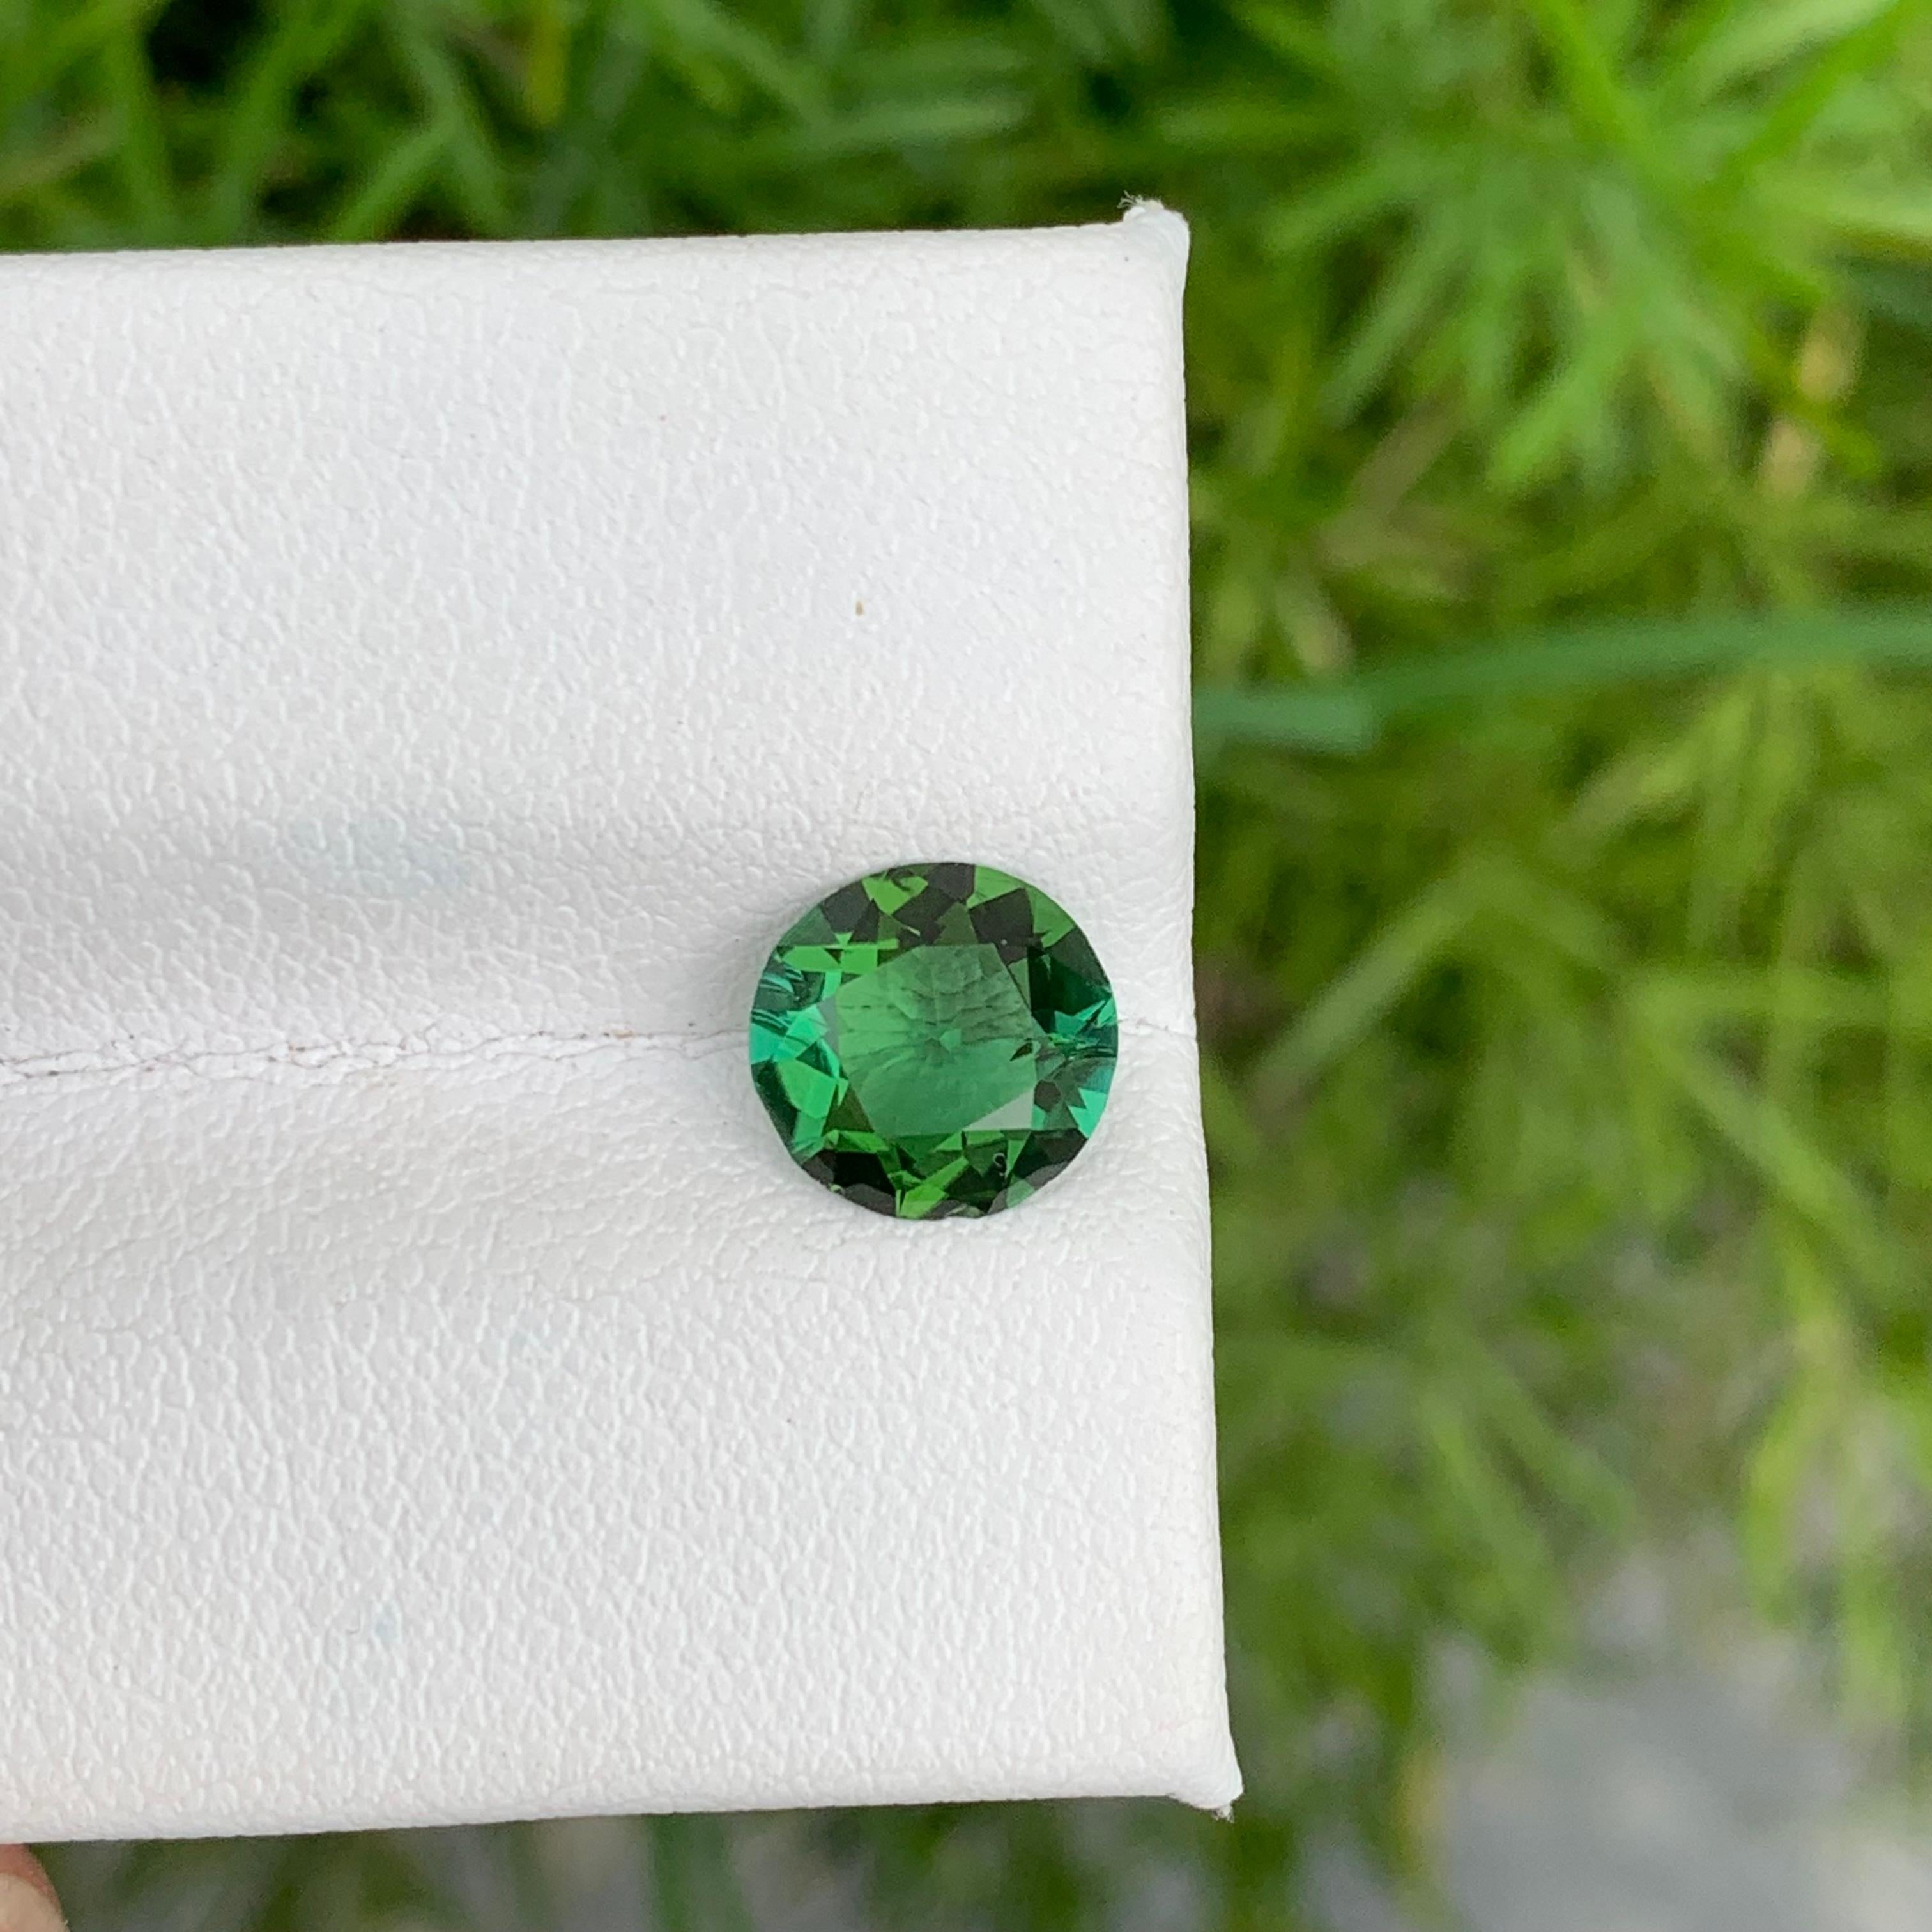 Taille ronde Superbe bague en tourmaline verte menthe de 1,40 carat, pierre précieuse taille ronde en vente